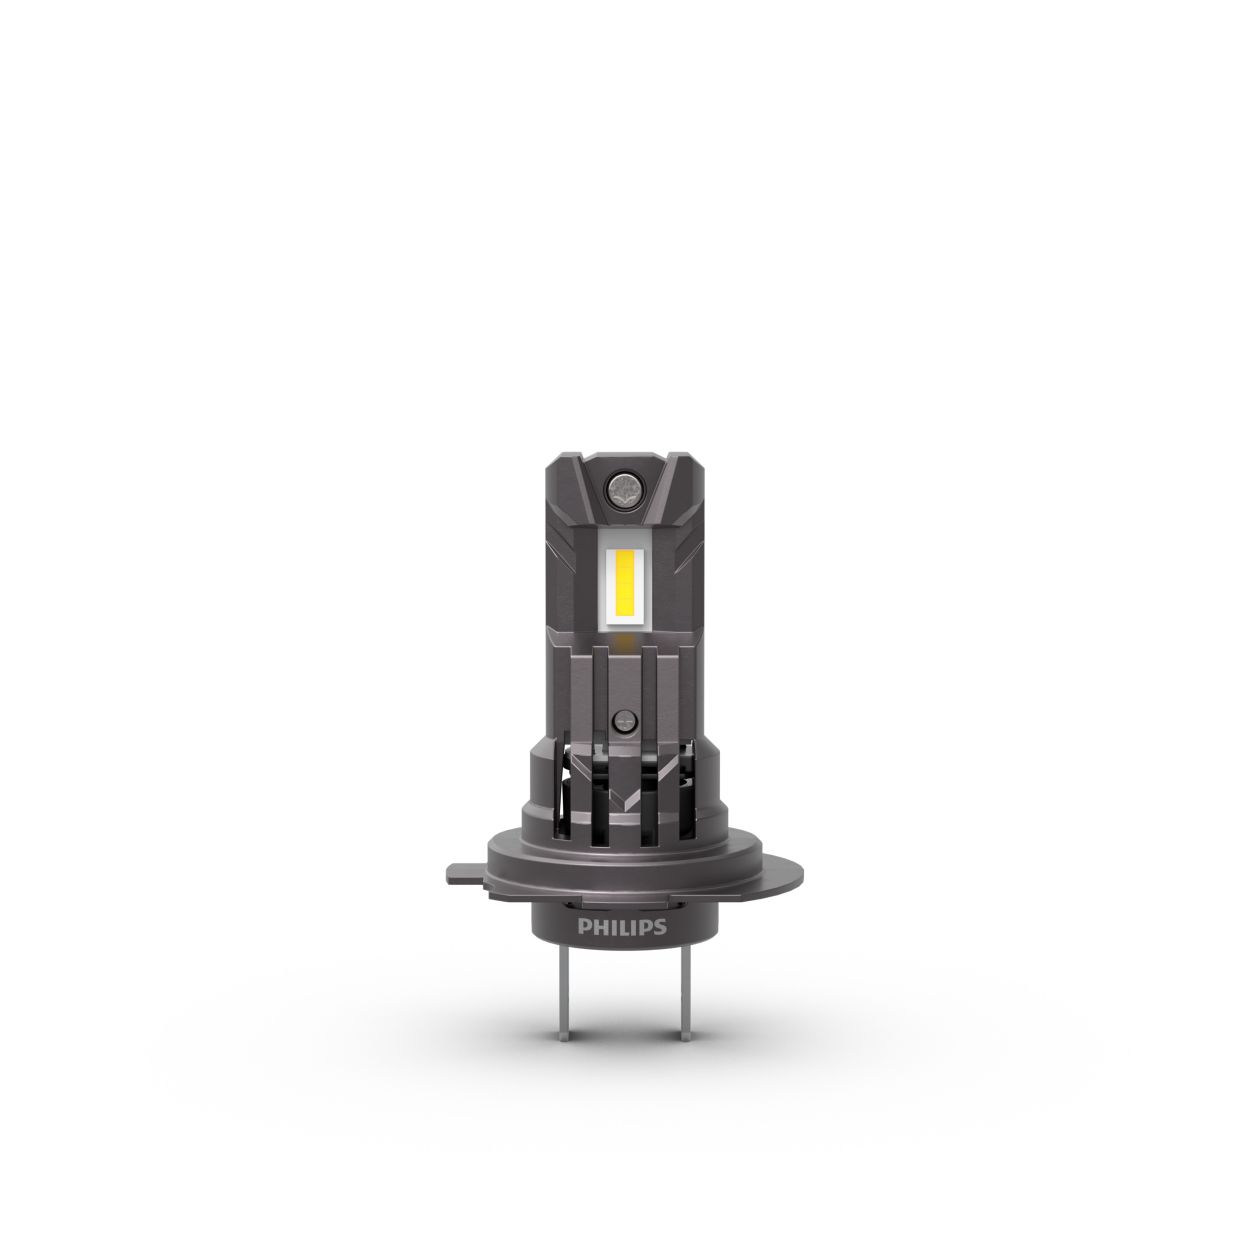 Philips Ultinon Access LED ampoule de phare automobile (H7), ultra